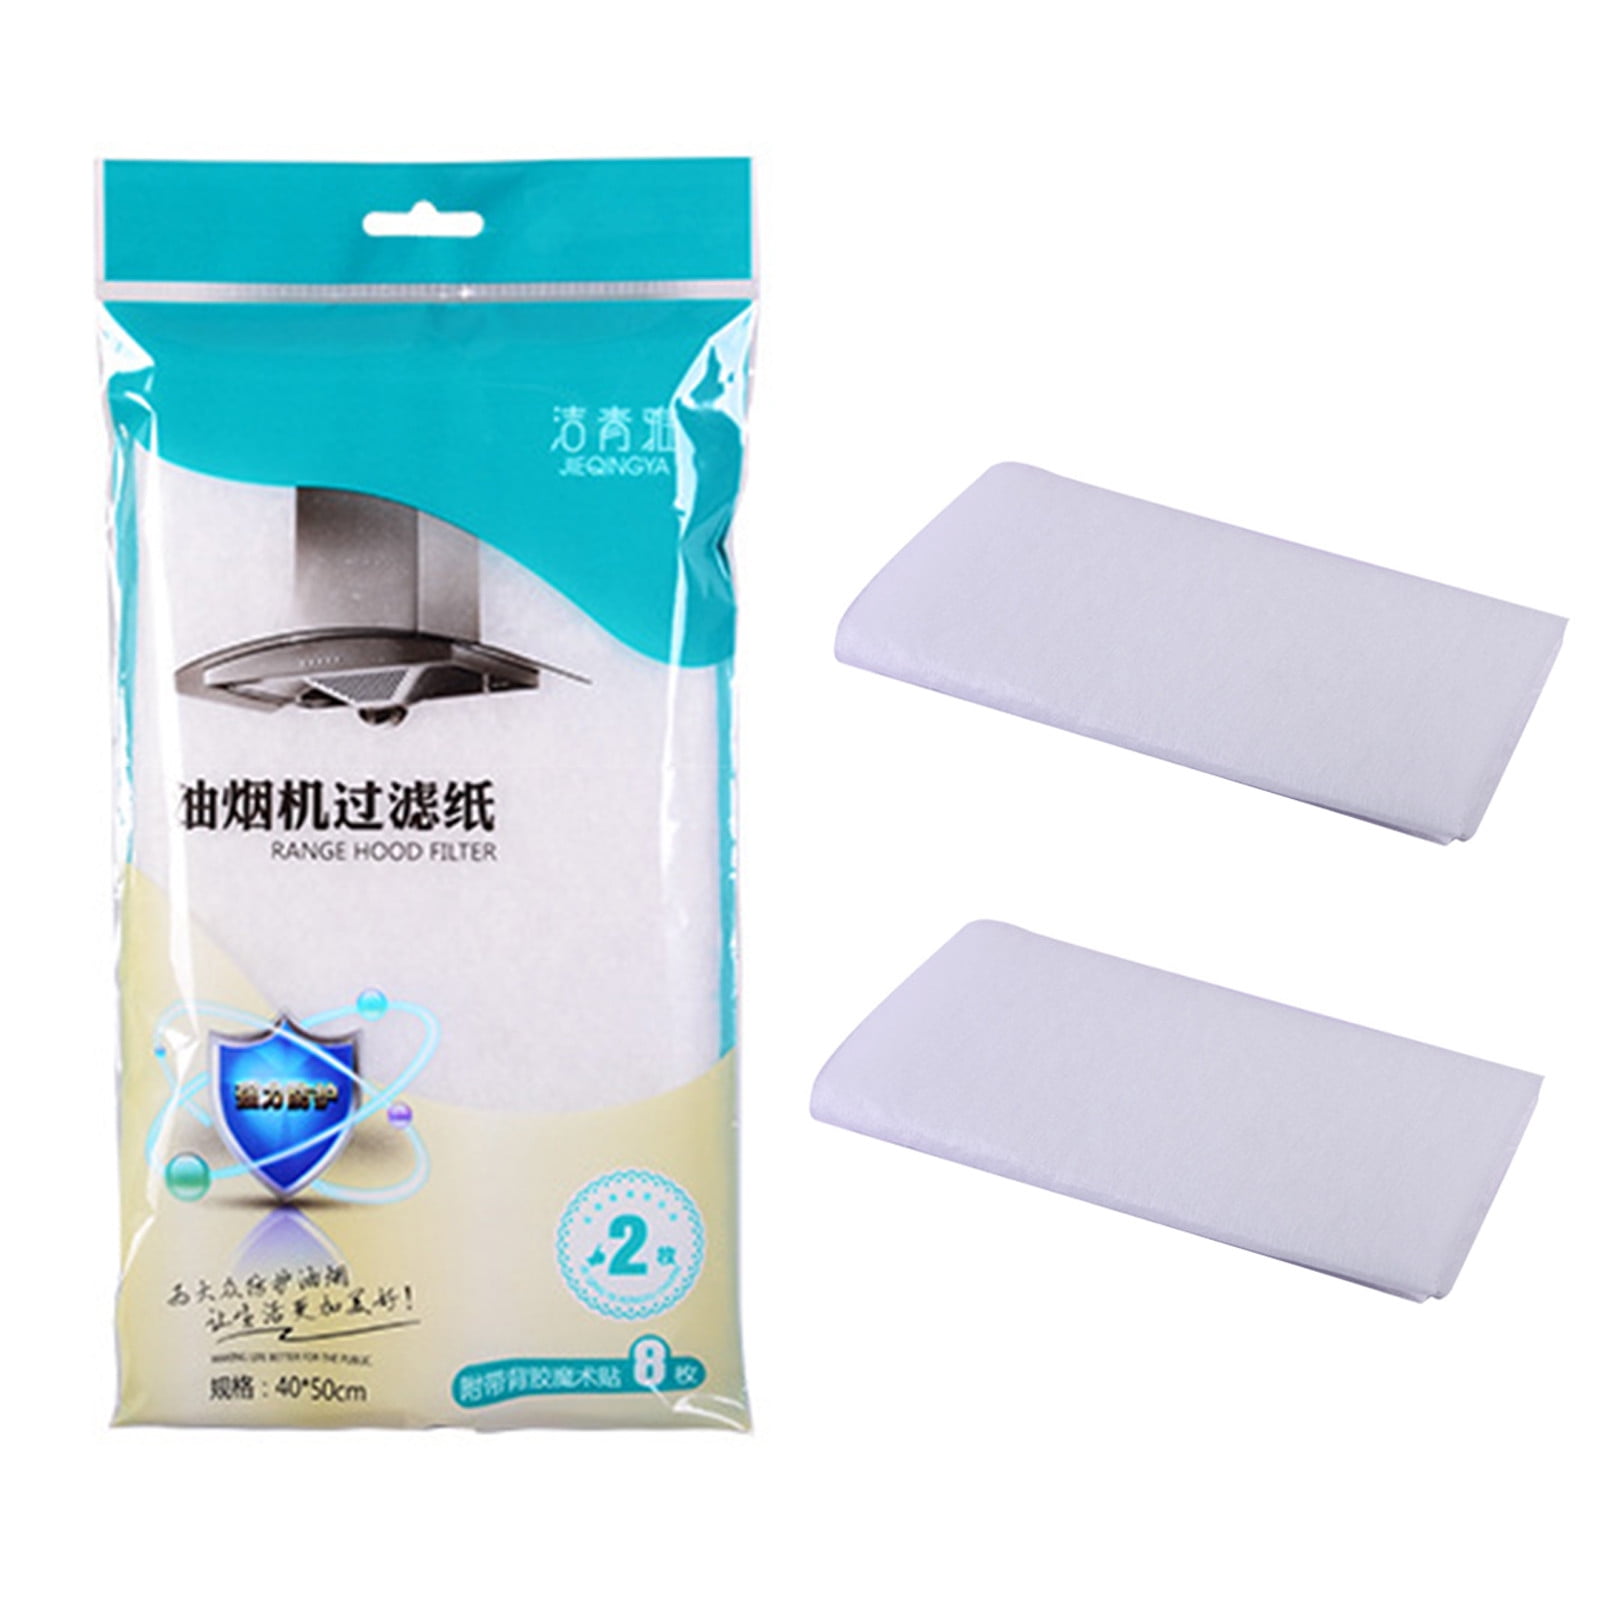 12pcs/Pack Kitchen Oil Filter Paper Smoke Exhaust Ventilator Nonwoven Range Hood 